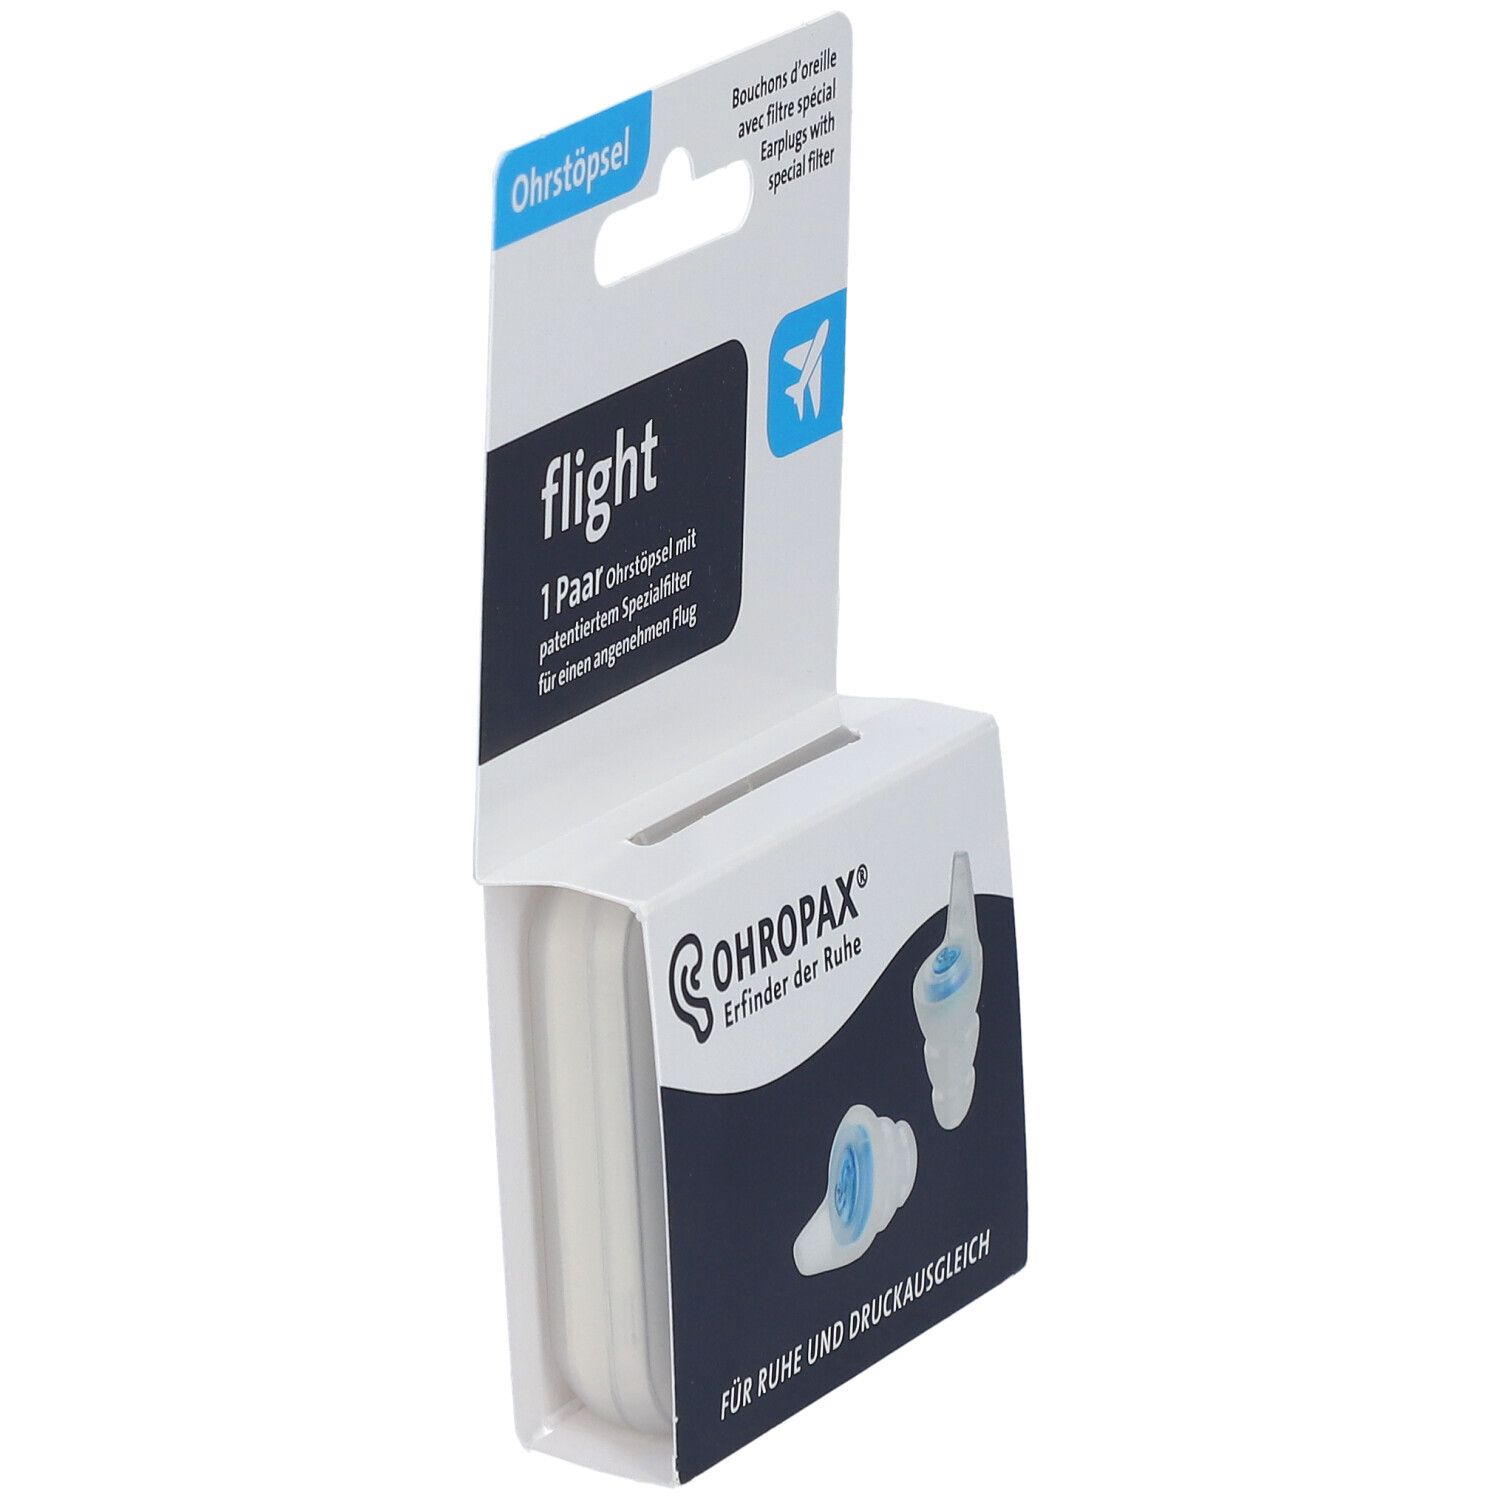 OHROPAX® Flight mit Filter